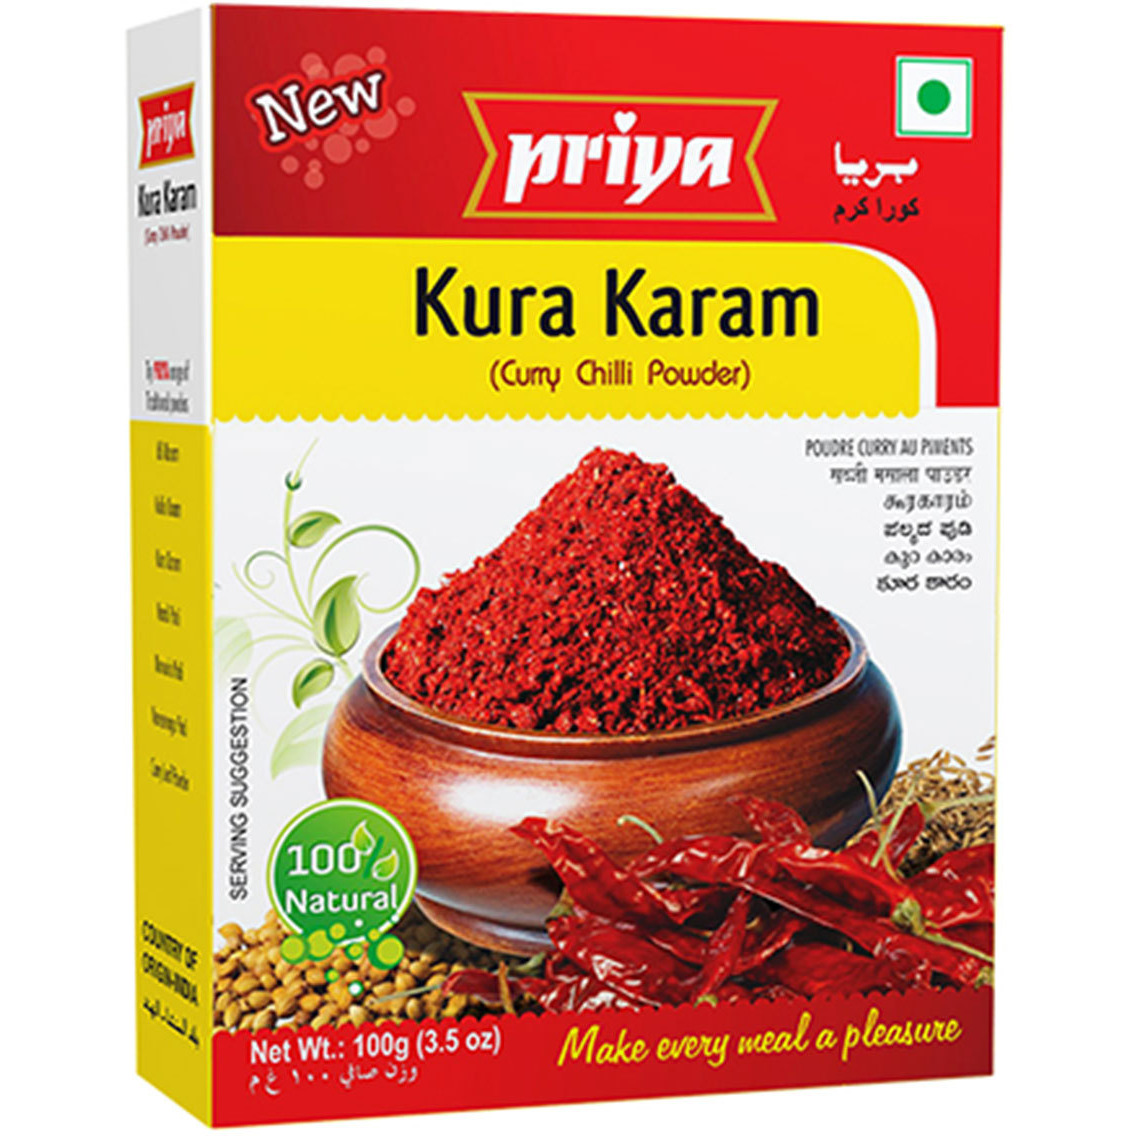 Priya Curry Chilli Powder (kura karam ) 100g (3.5oz)